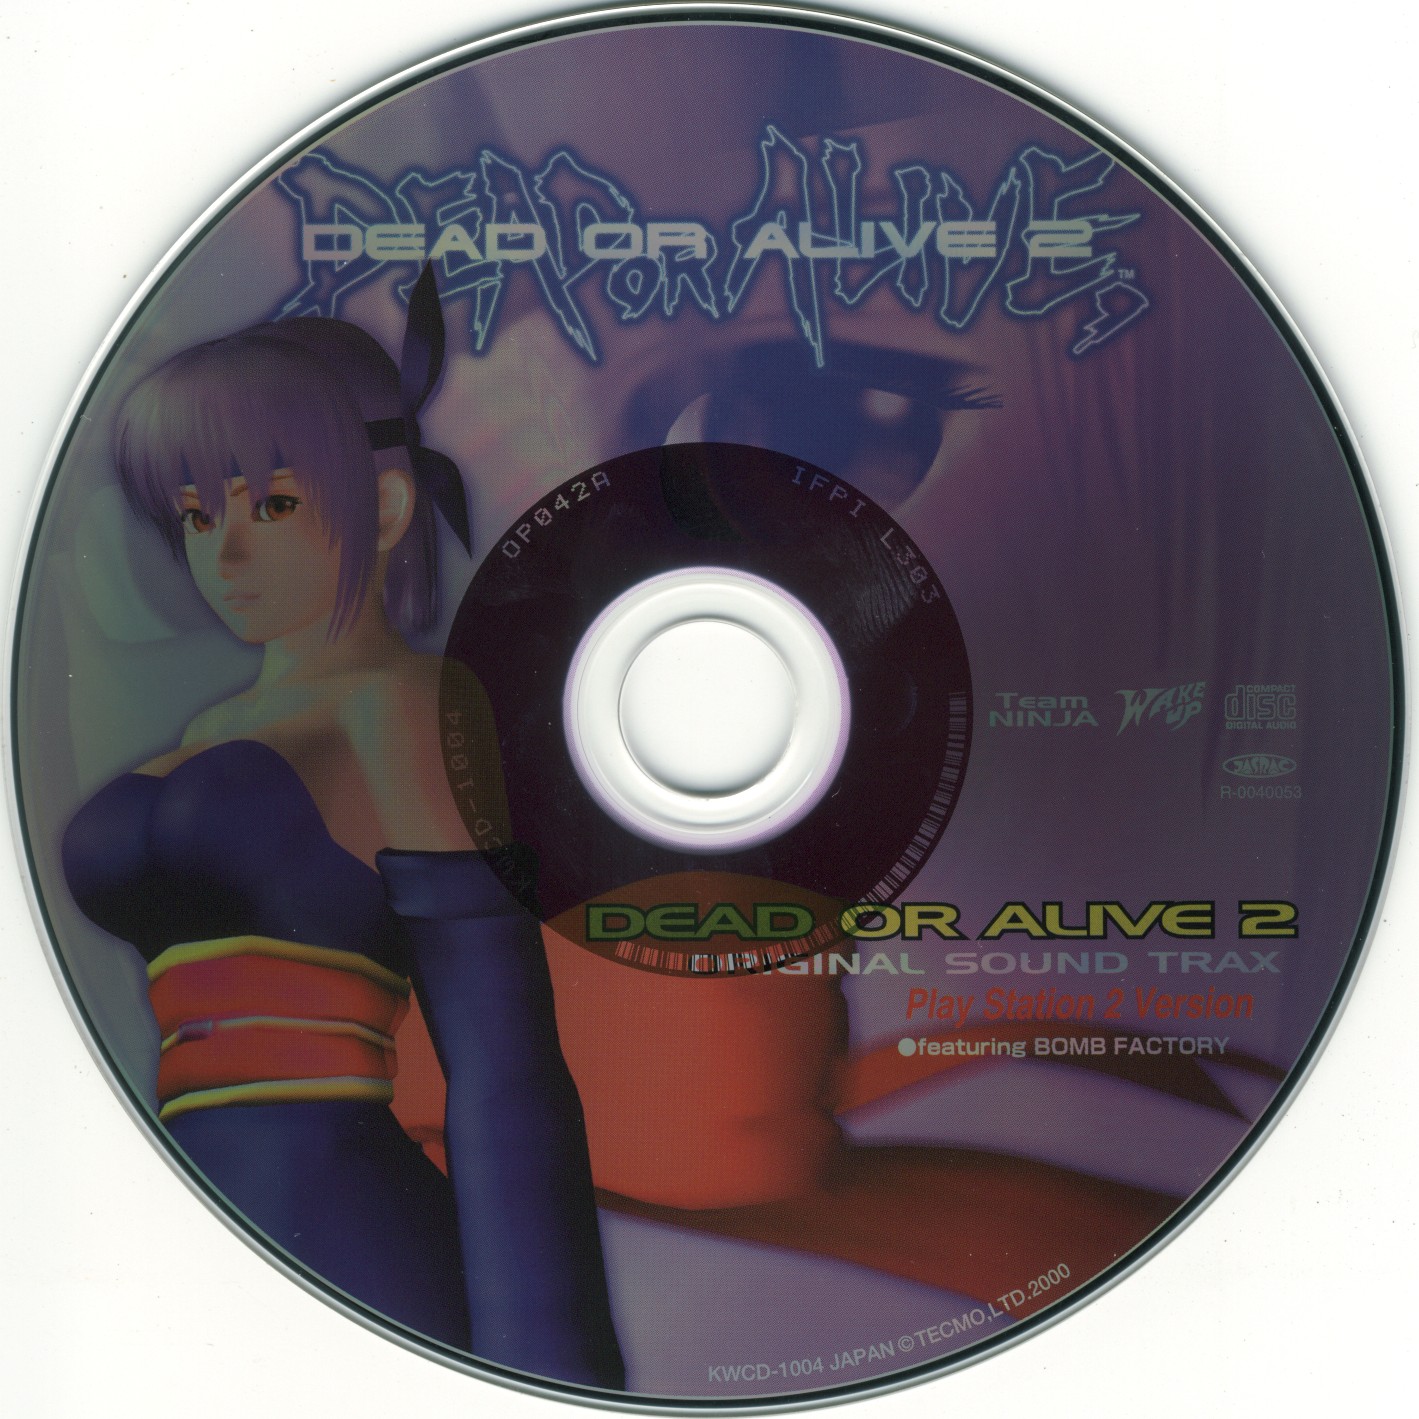 Dead or Alive 2 Original Sound Trax ~PlayStation 2 Version~ (2000) MP3 -  Download Dead or Alive 2 Original Sound Trax ~PlayStation 2 Version~ (2000)  Soundtracks for FREE!